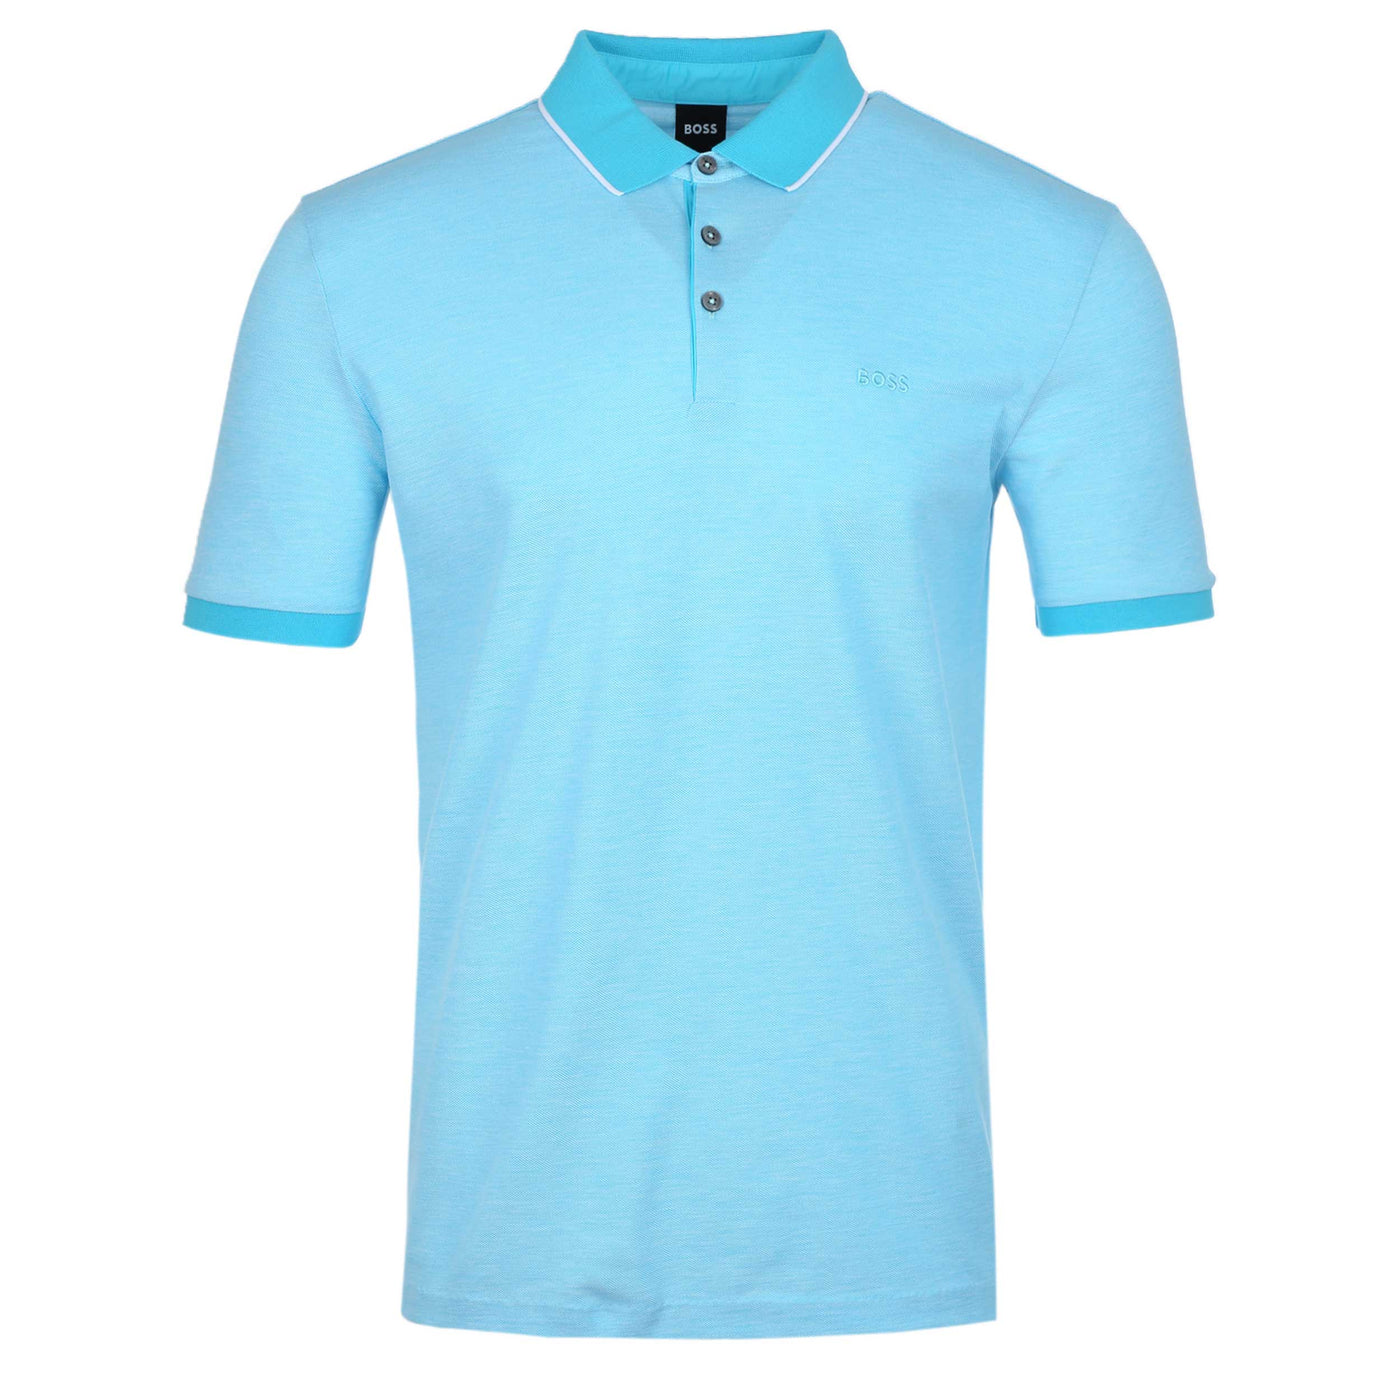 BOSS Prout 28 Polo Shirt in Aqua Blue